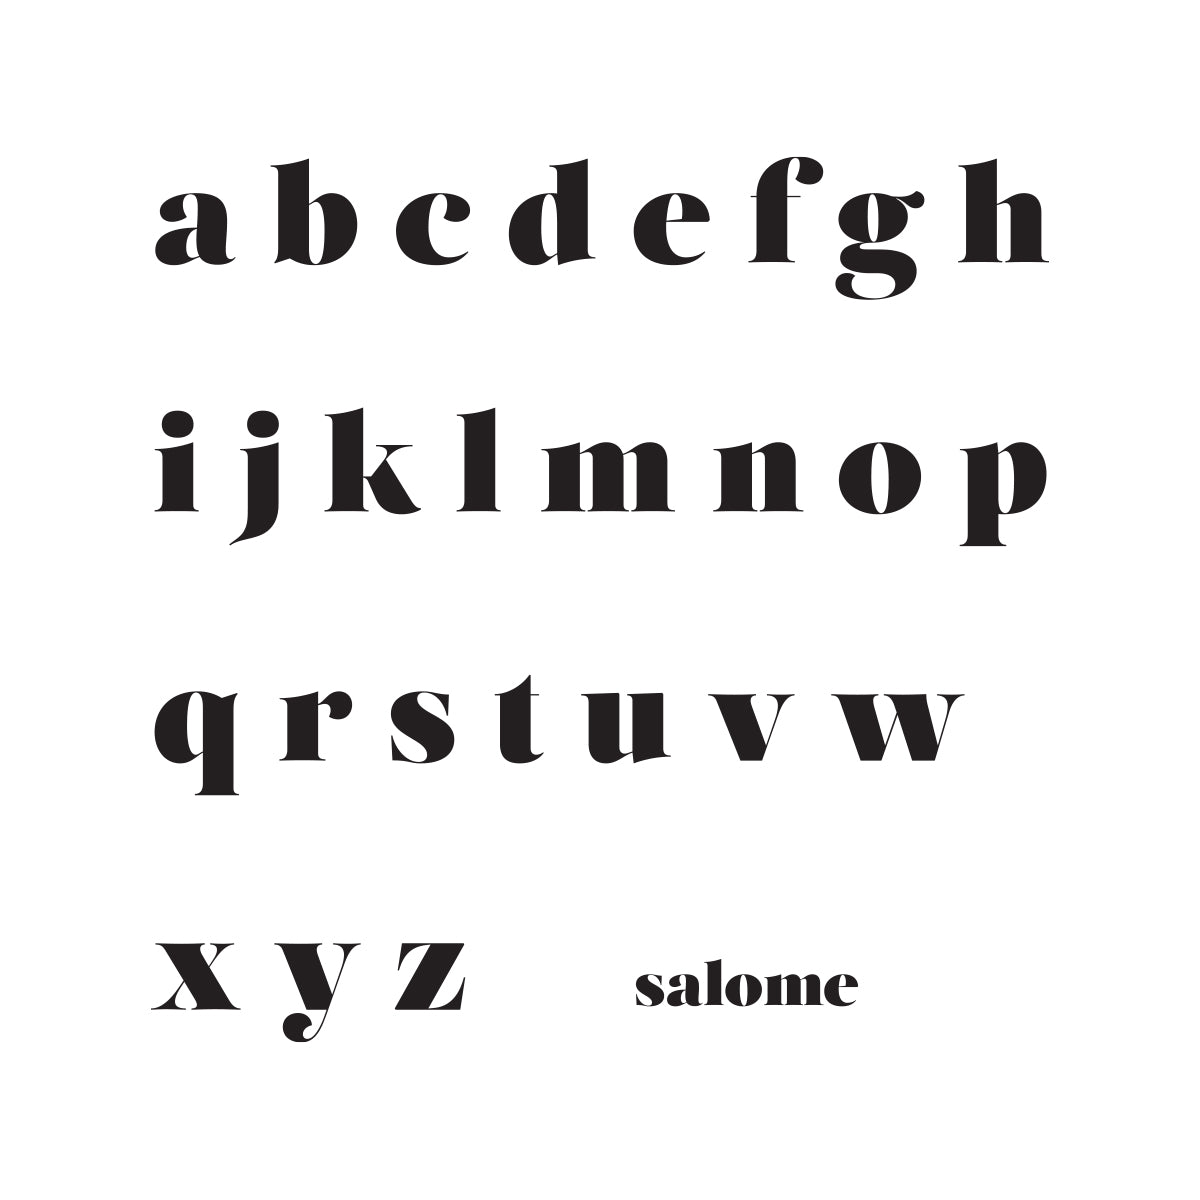 Salome Written Number Block.